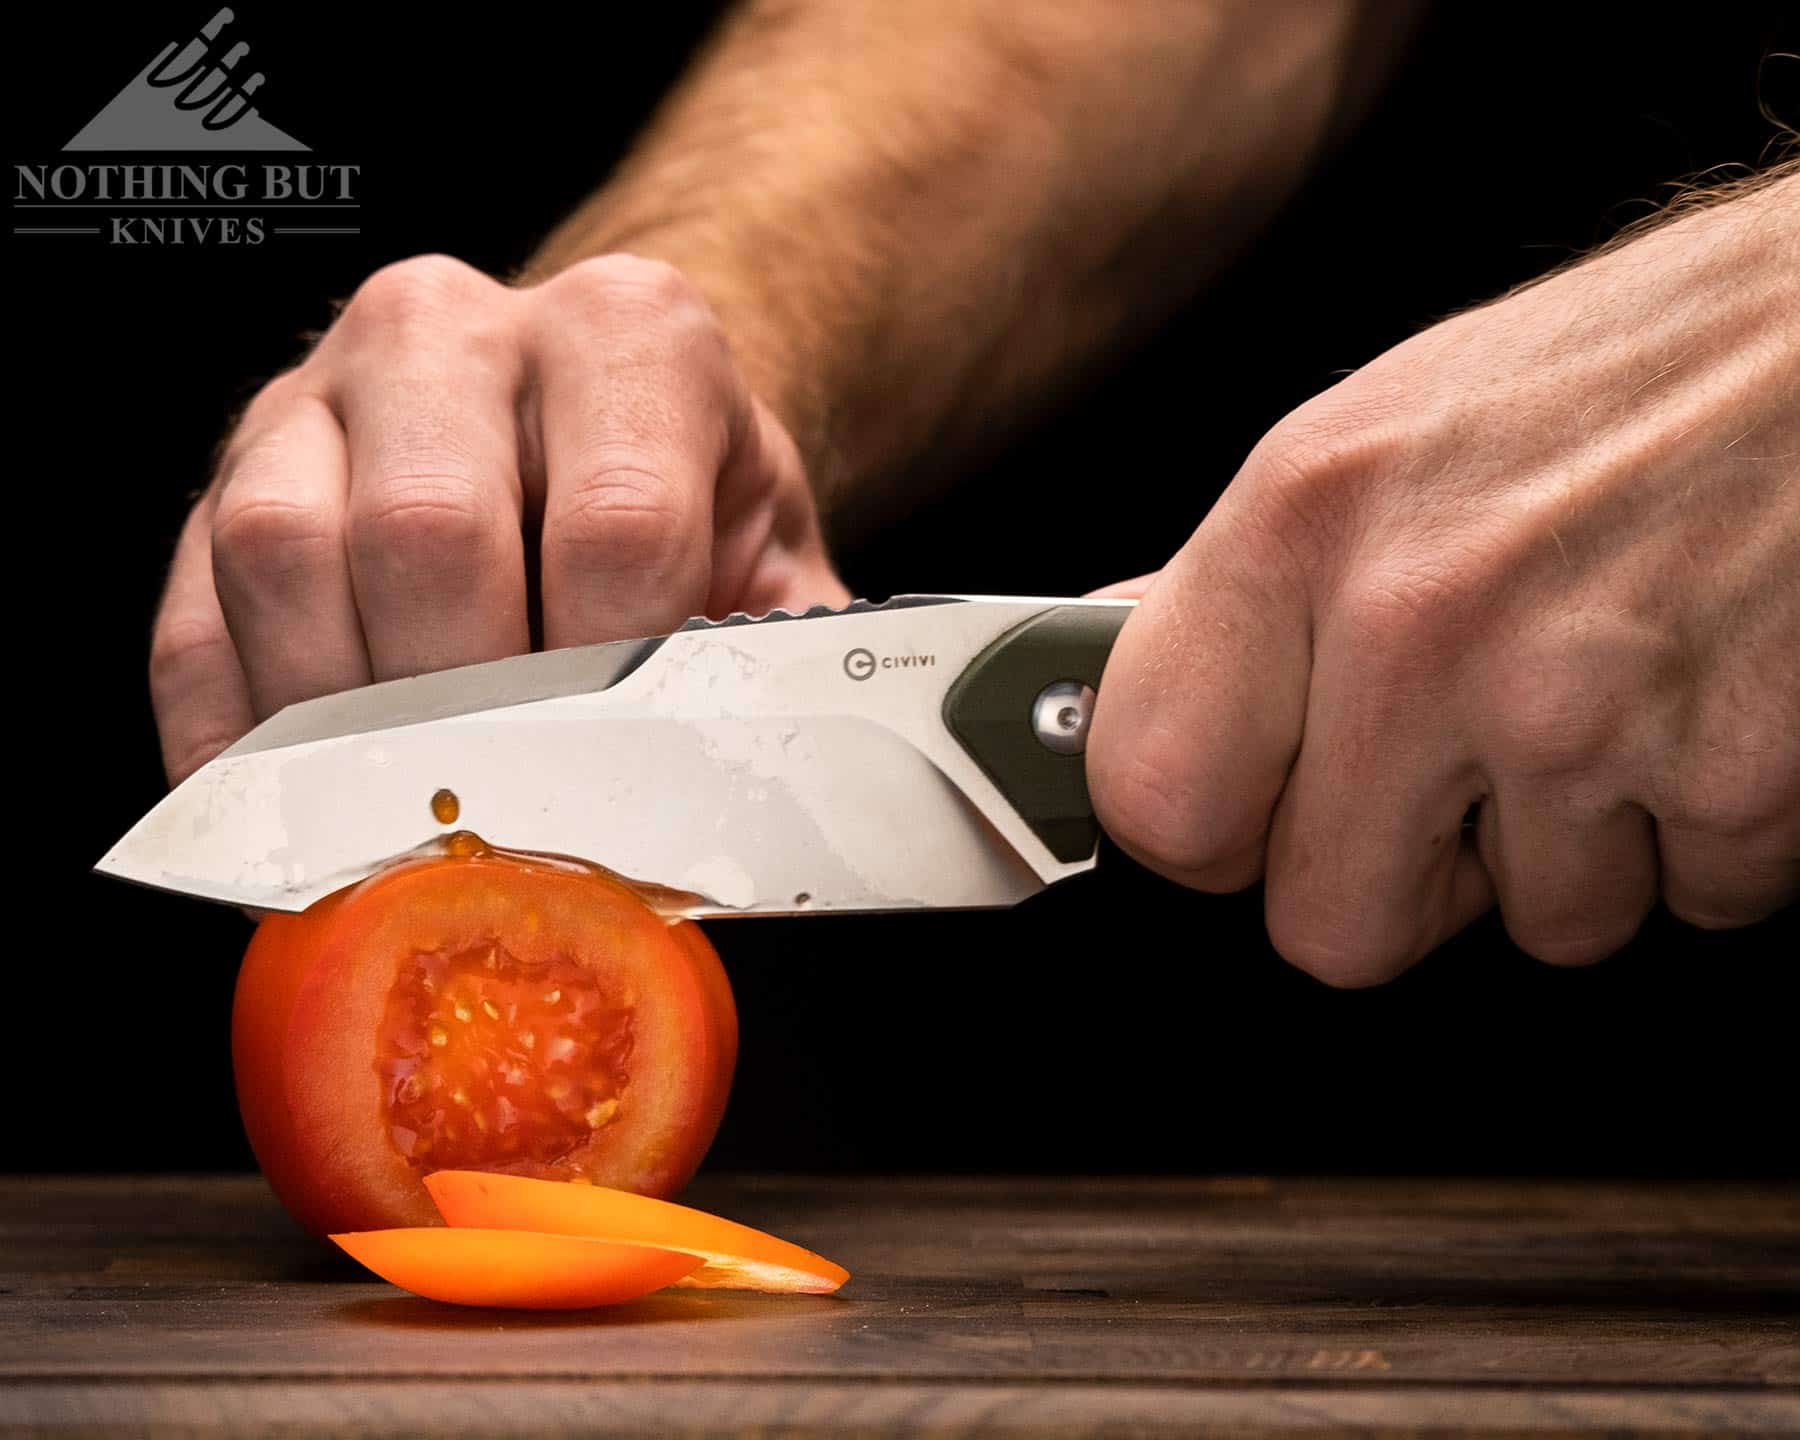 The Civivi Kepler slicing through a tomato on an end grain cutting board. 